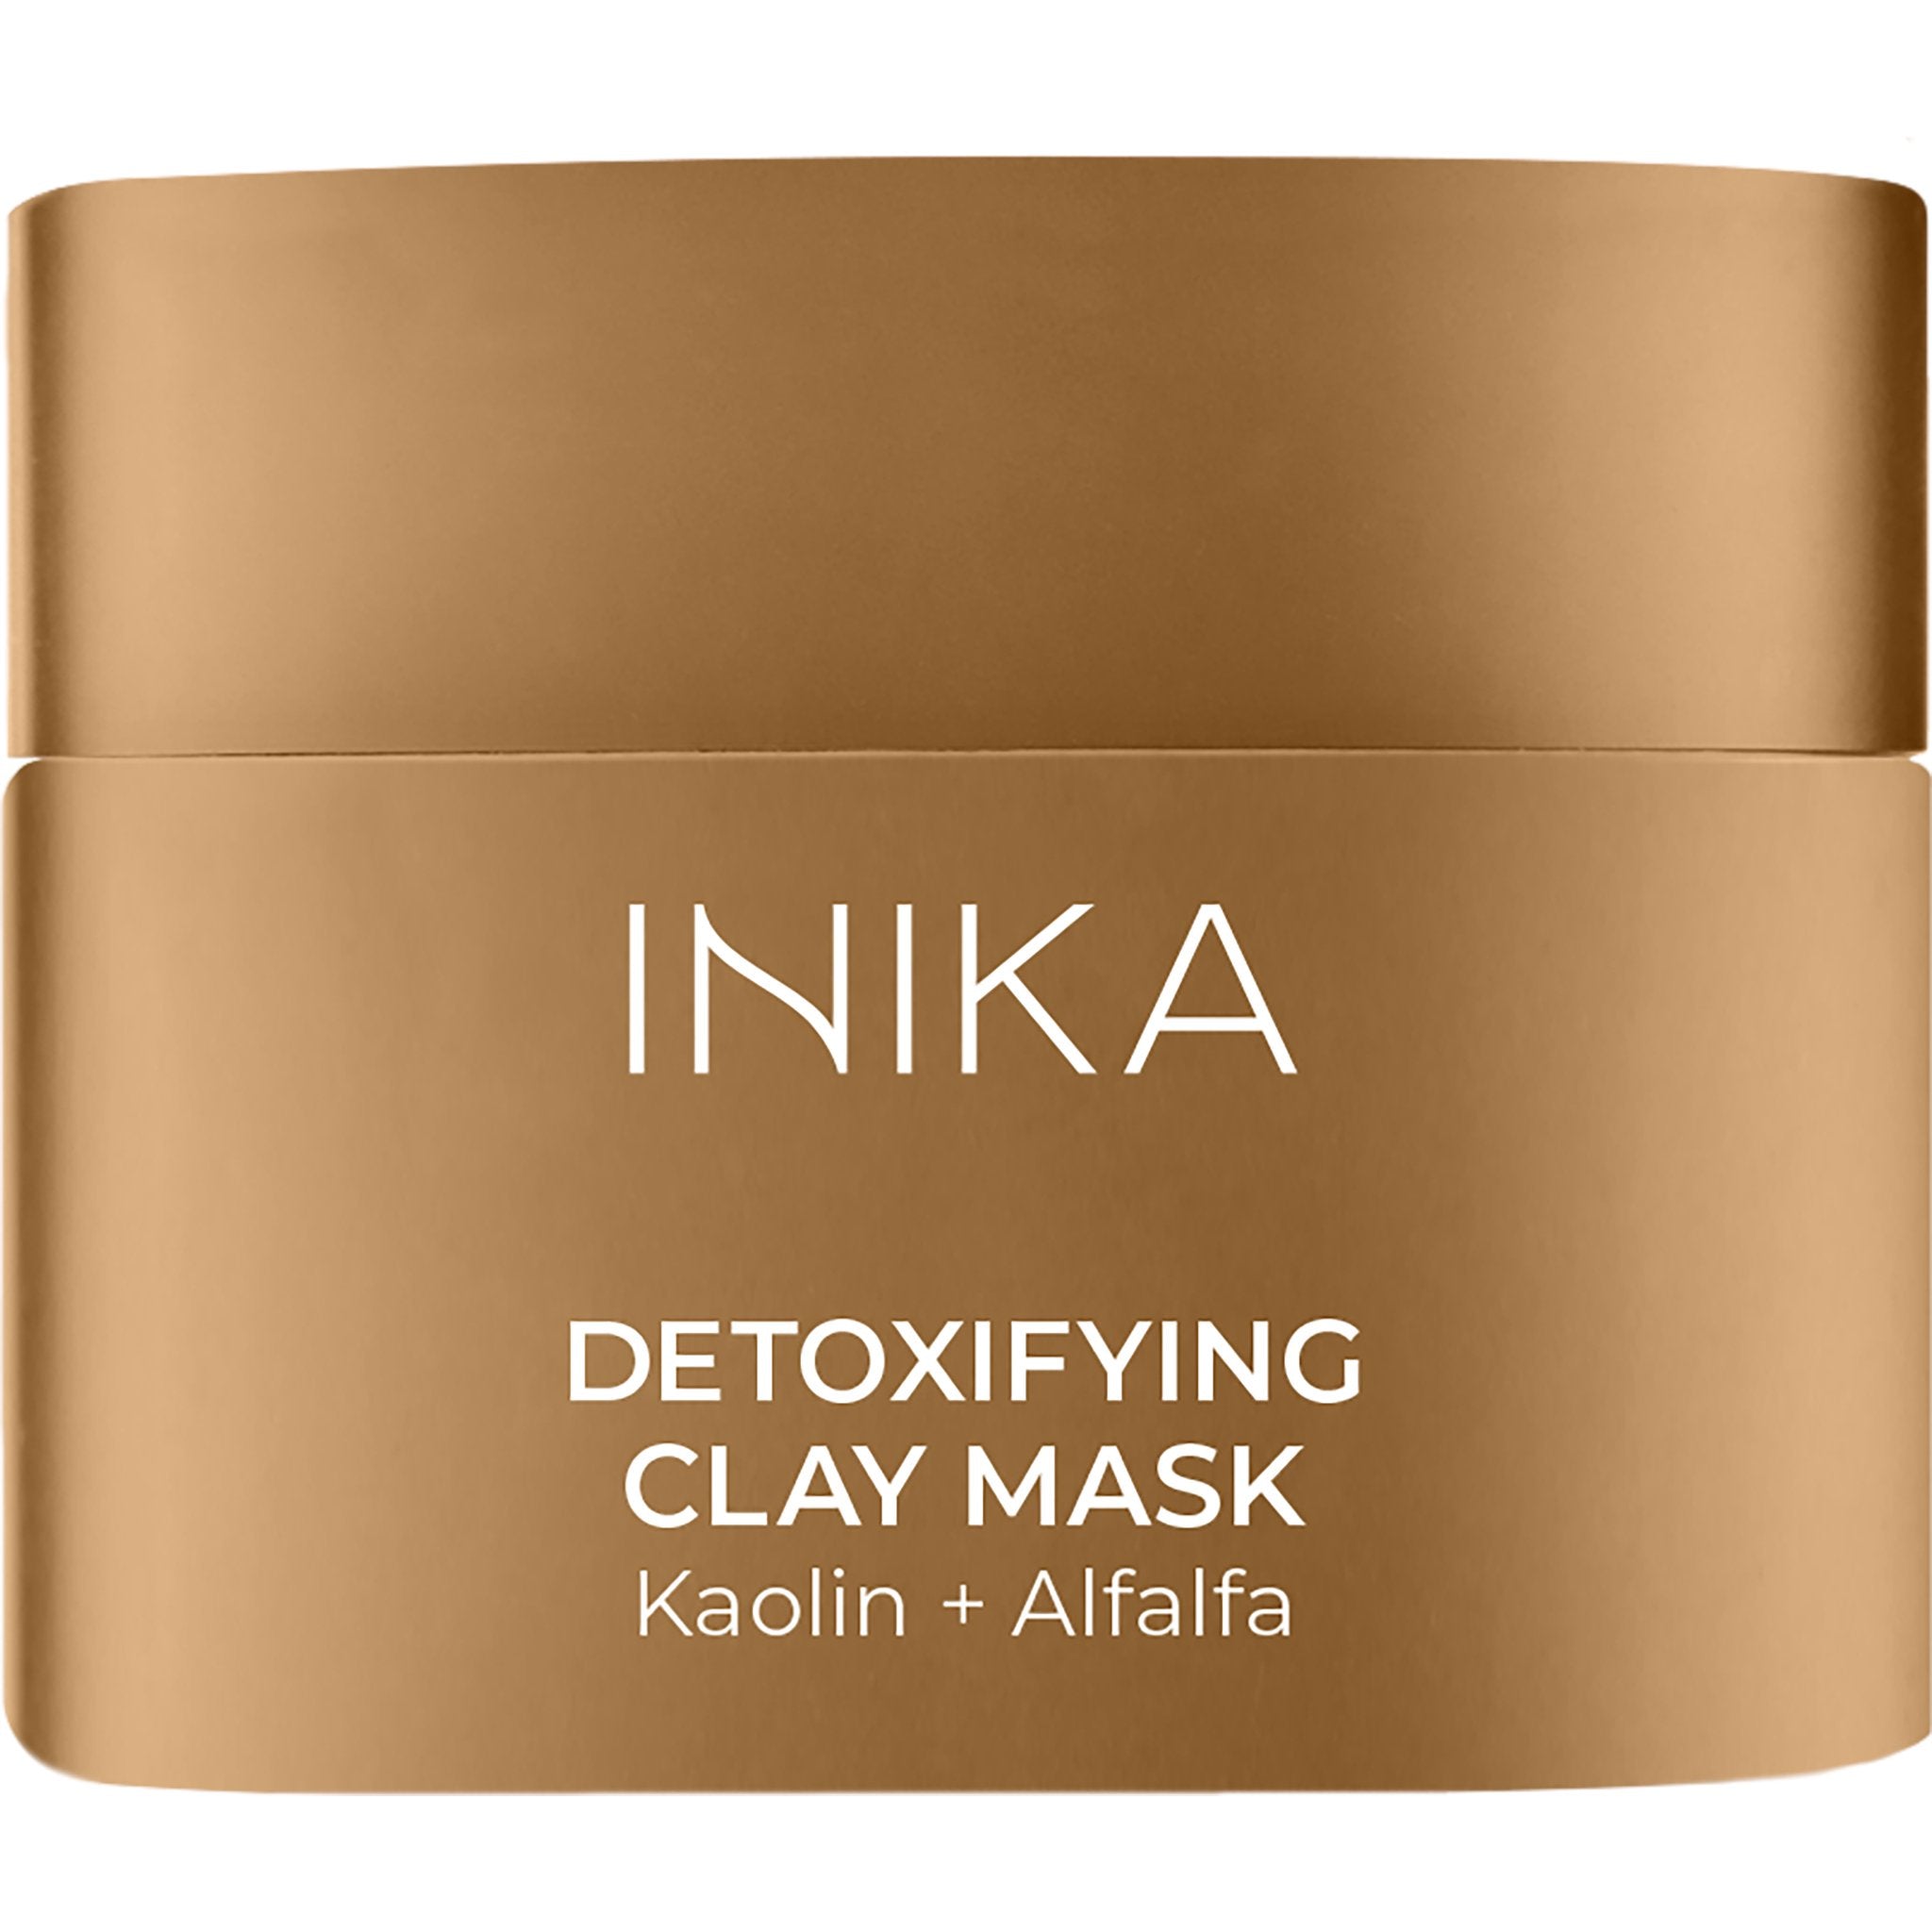 Detoxifying Clay Mask - mypure.co.uk